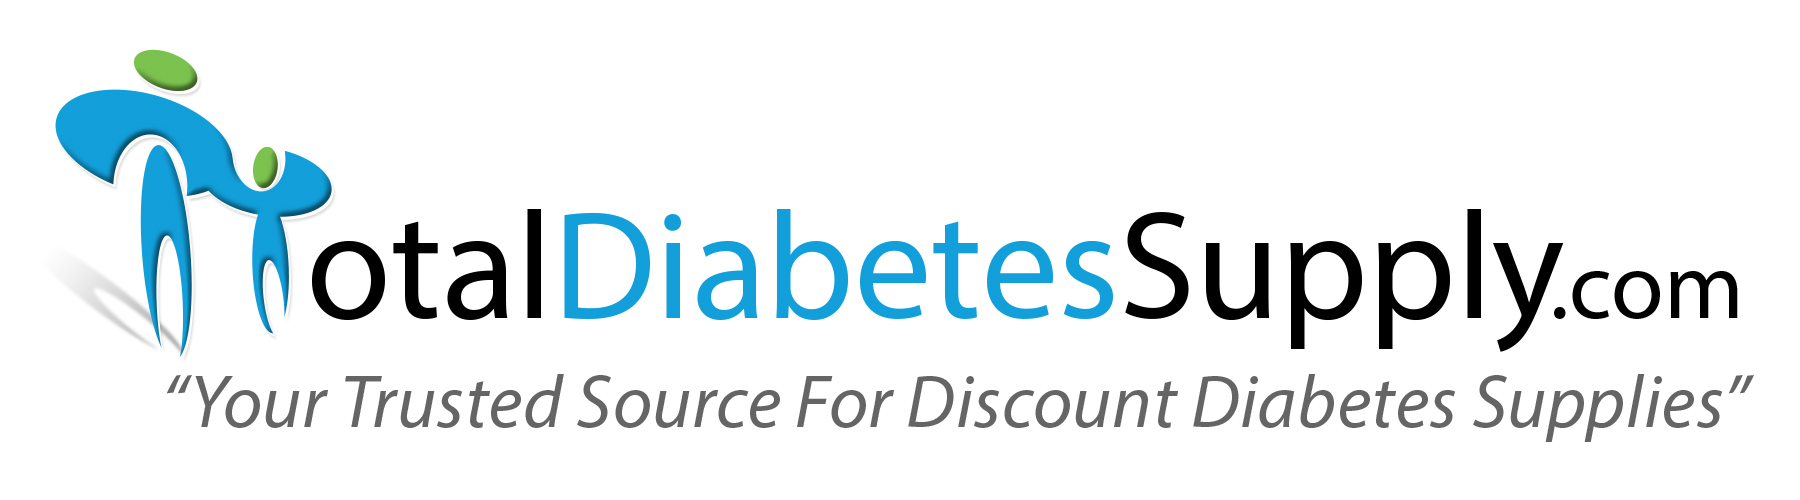 7.Total Diabetes Supply